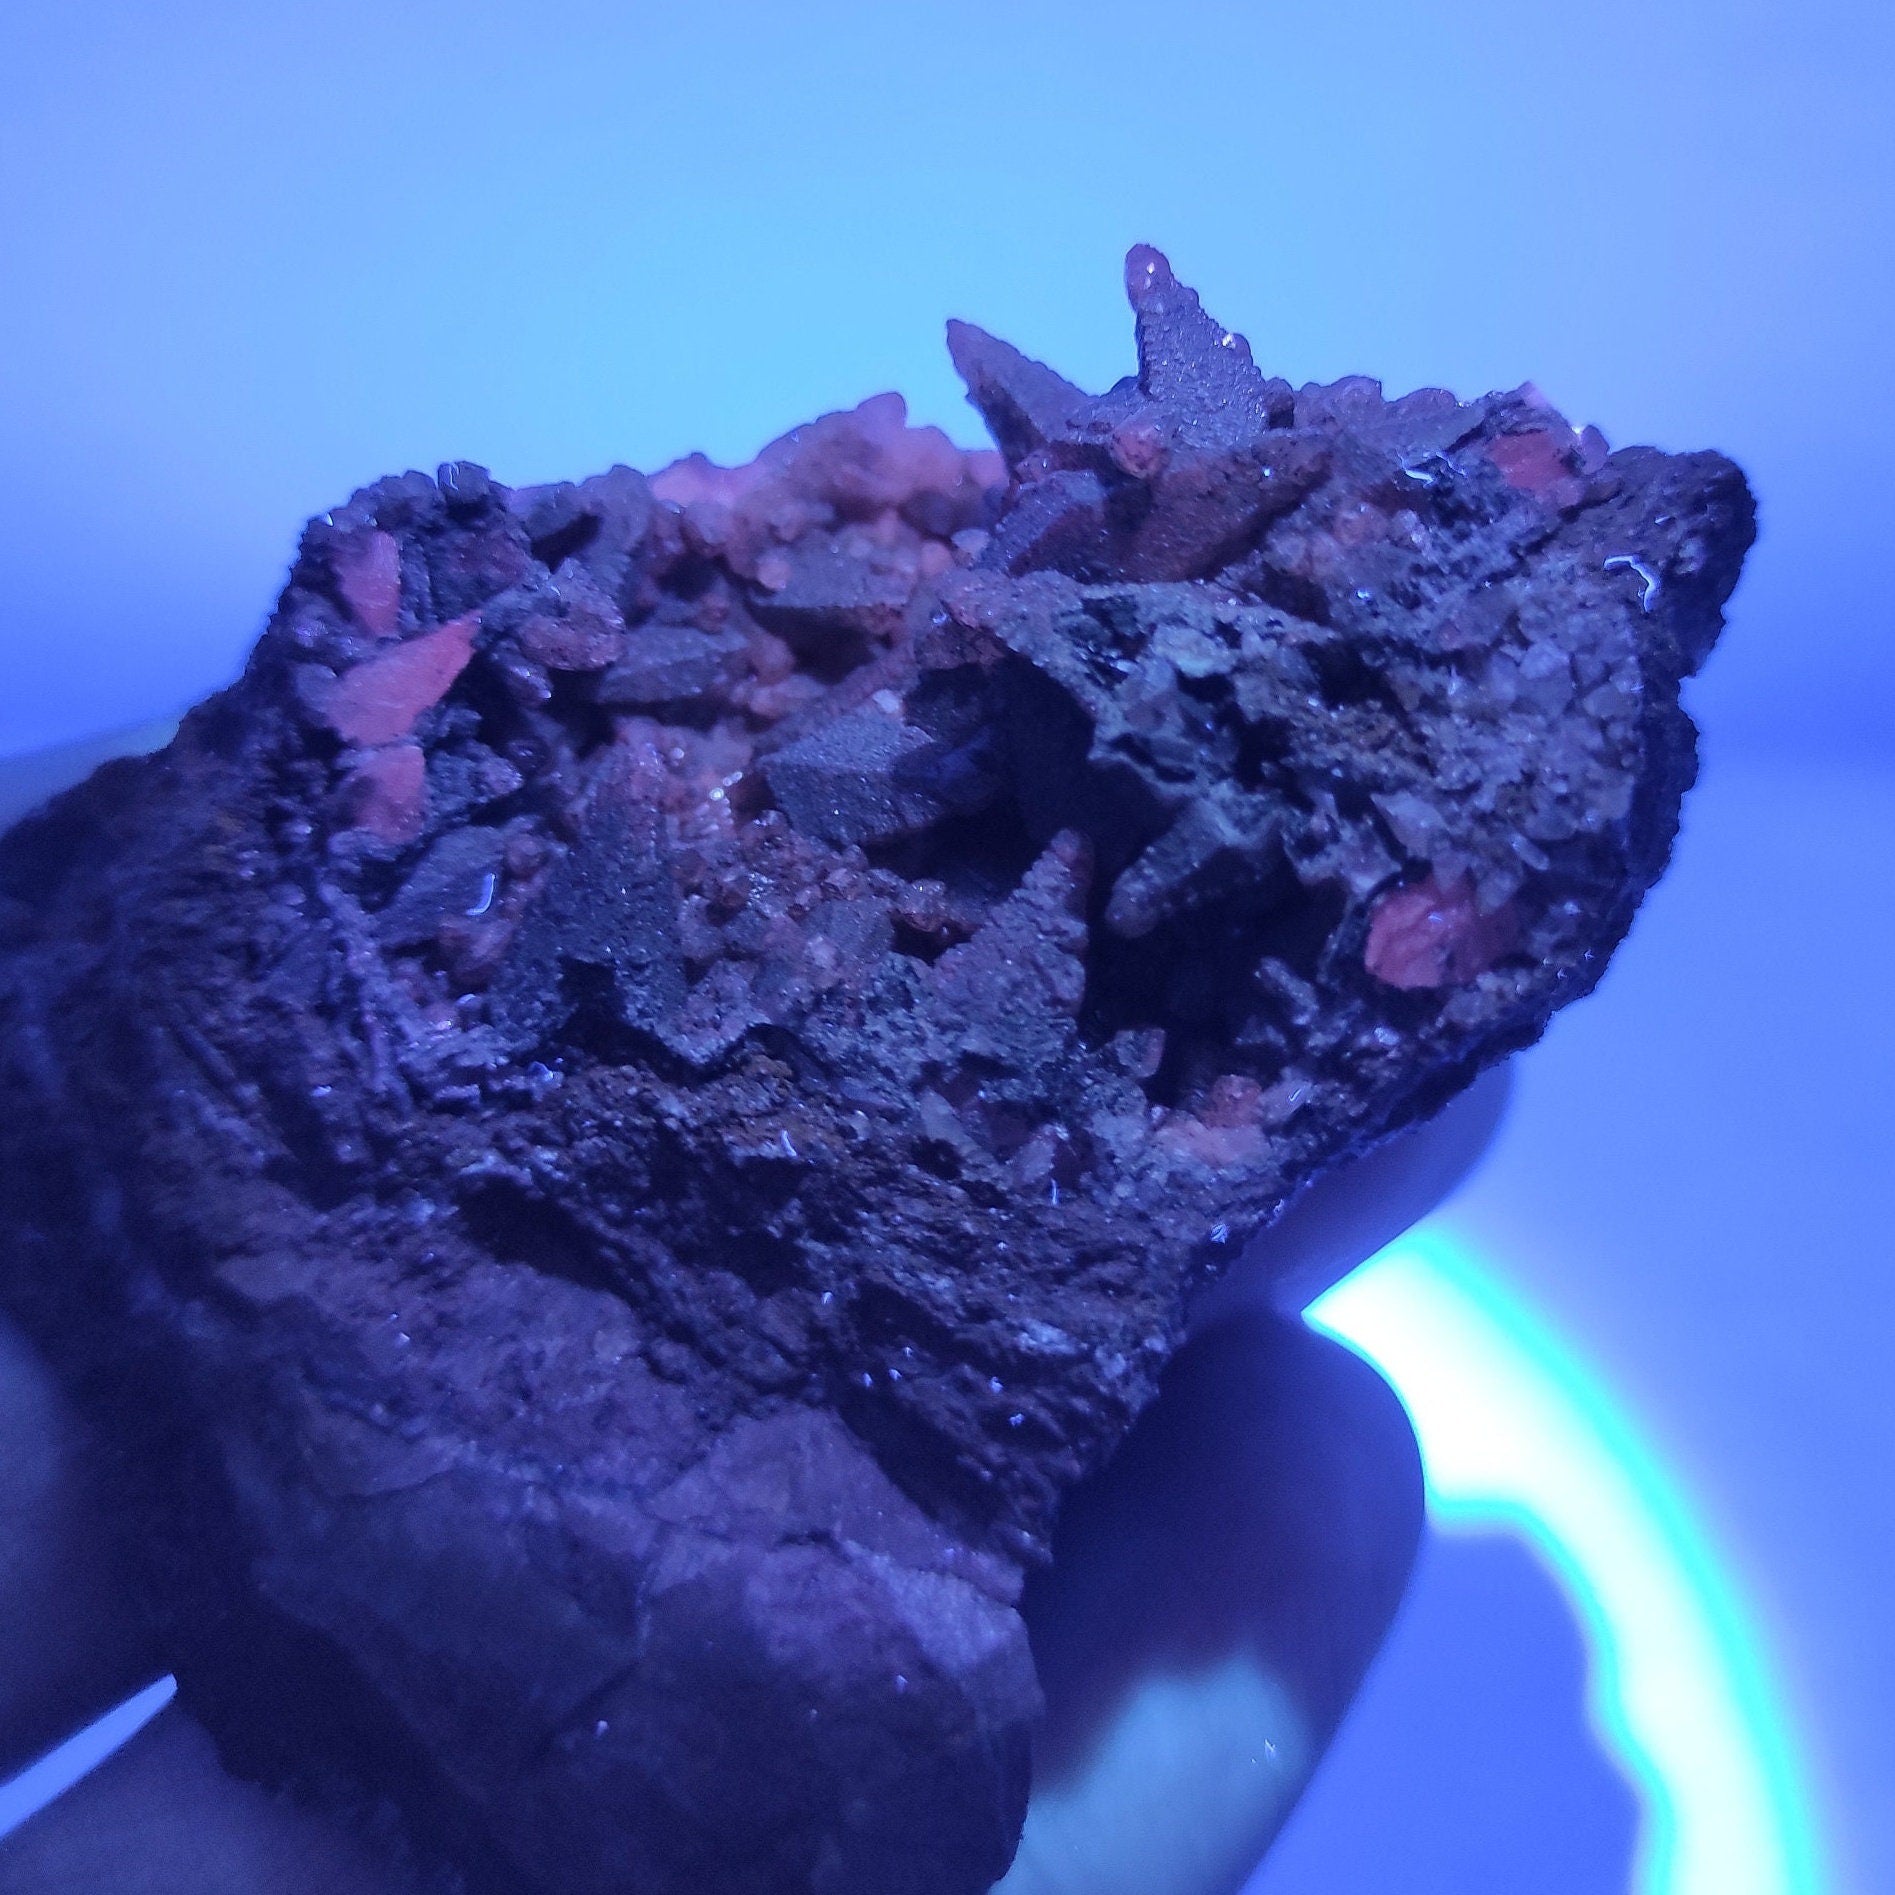 86g UV Reactive Calcite - Phosphorescent Calcite Specimen - Cambridge Cove, Nova Scotia, Canada - UV Minerals - Minerals with Afterglow